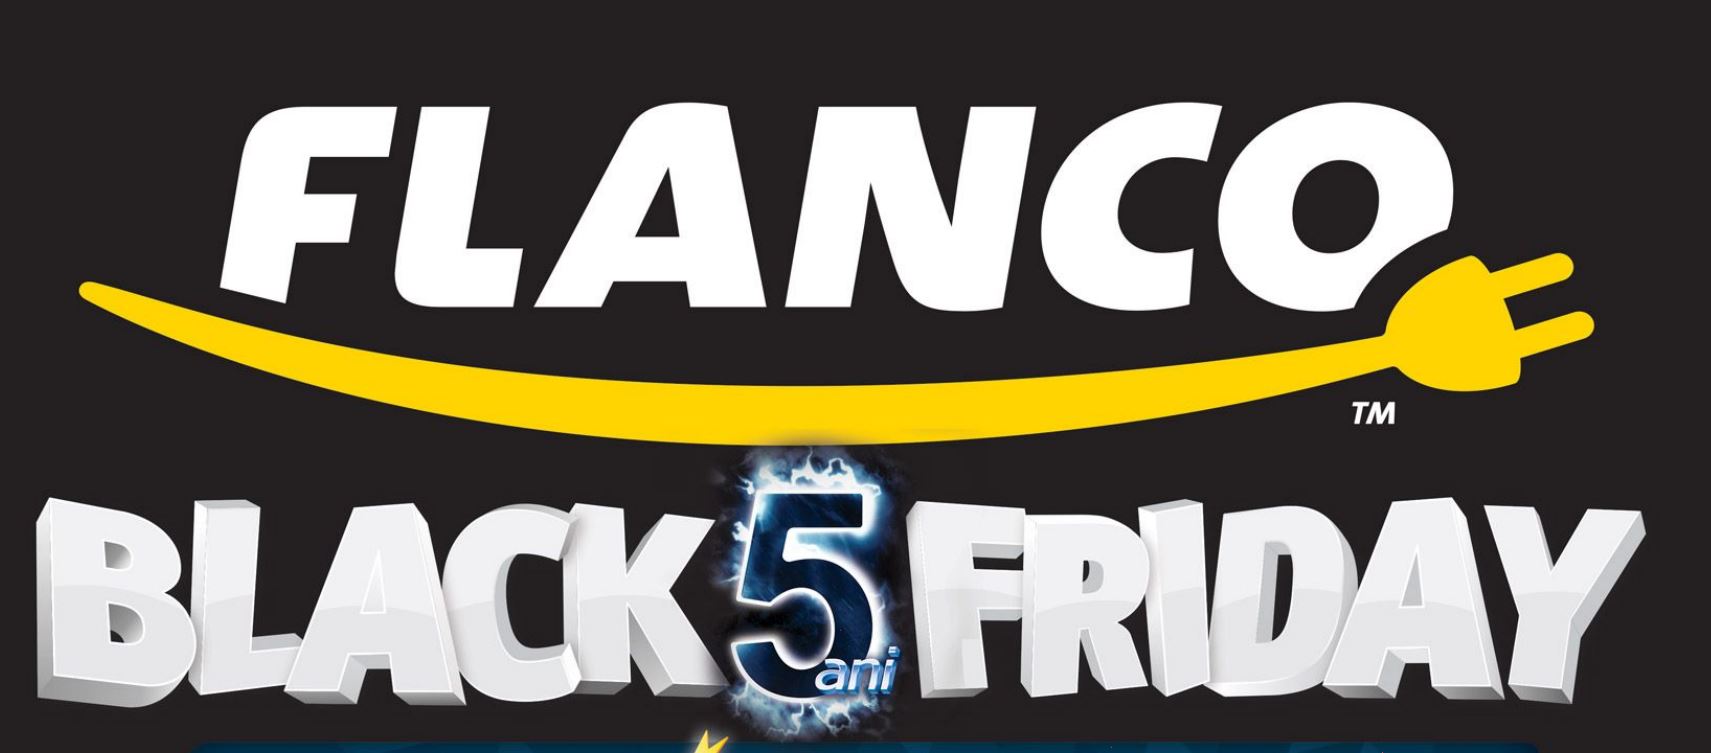 Flanco Black Friday 2015 discount catalog